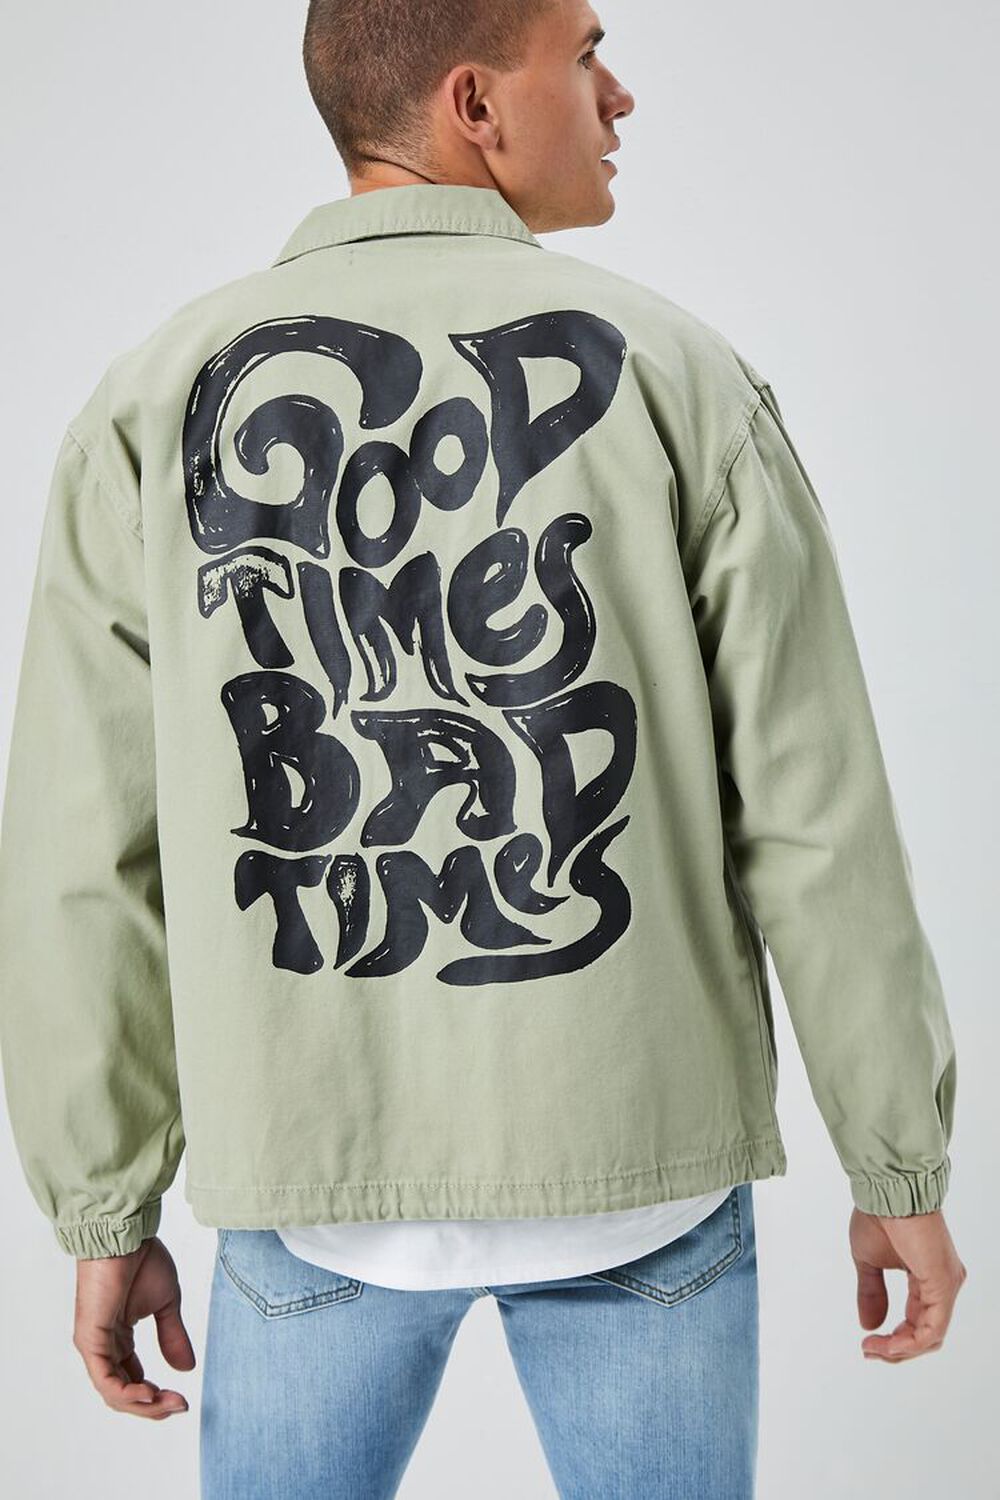 SAGE/BLACK Good Times Bad Times Graphic Coach Jacket, image 1